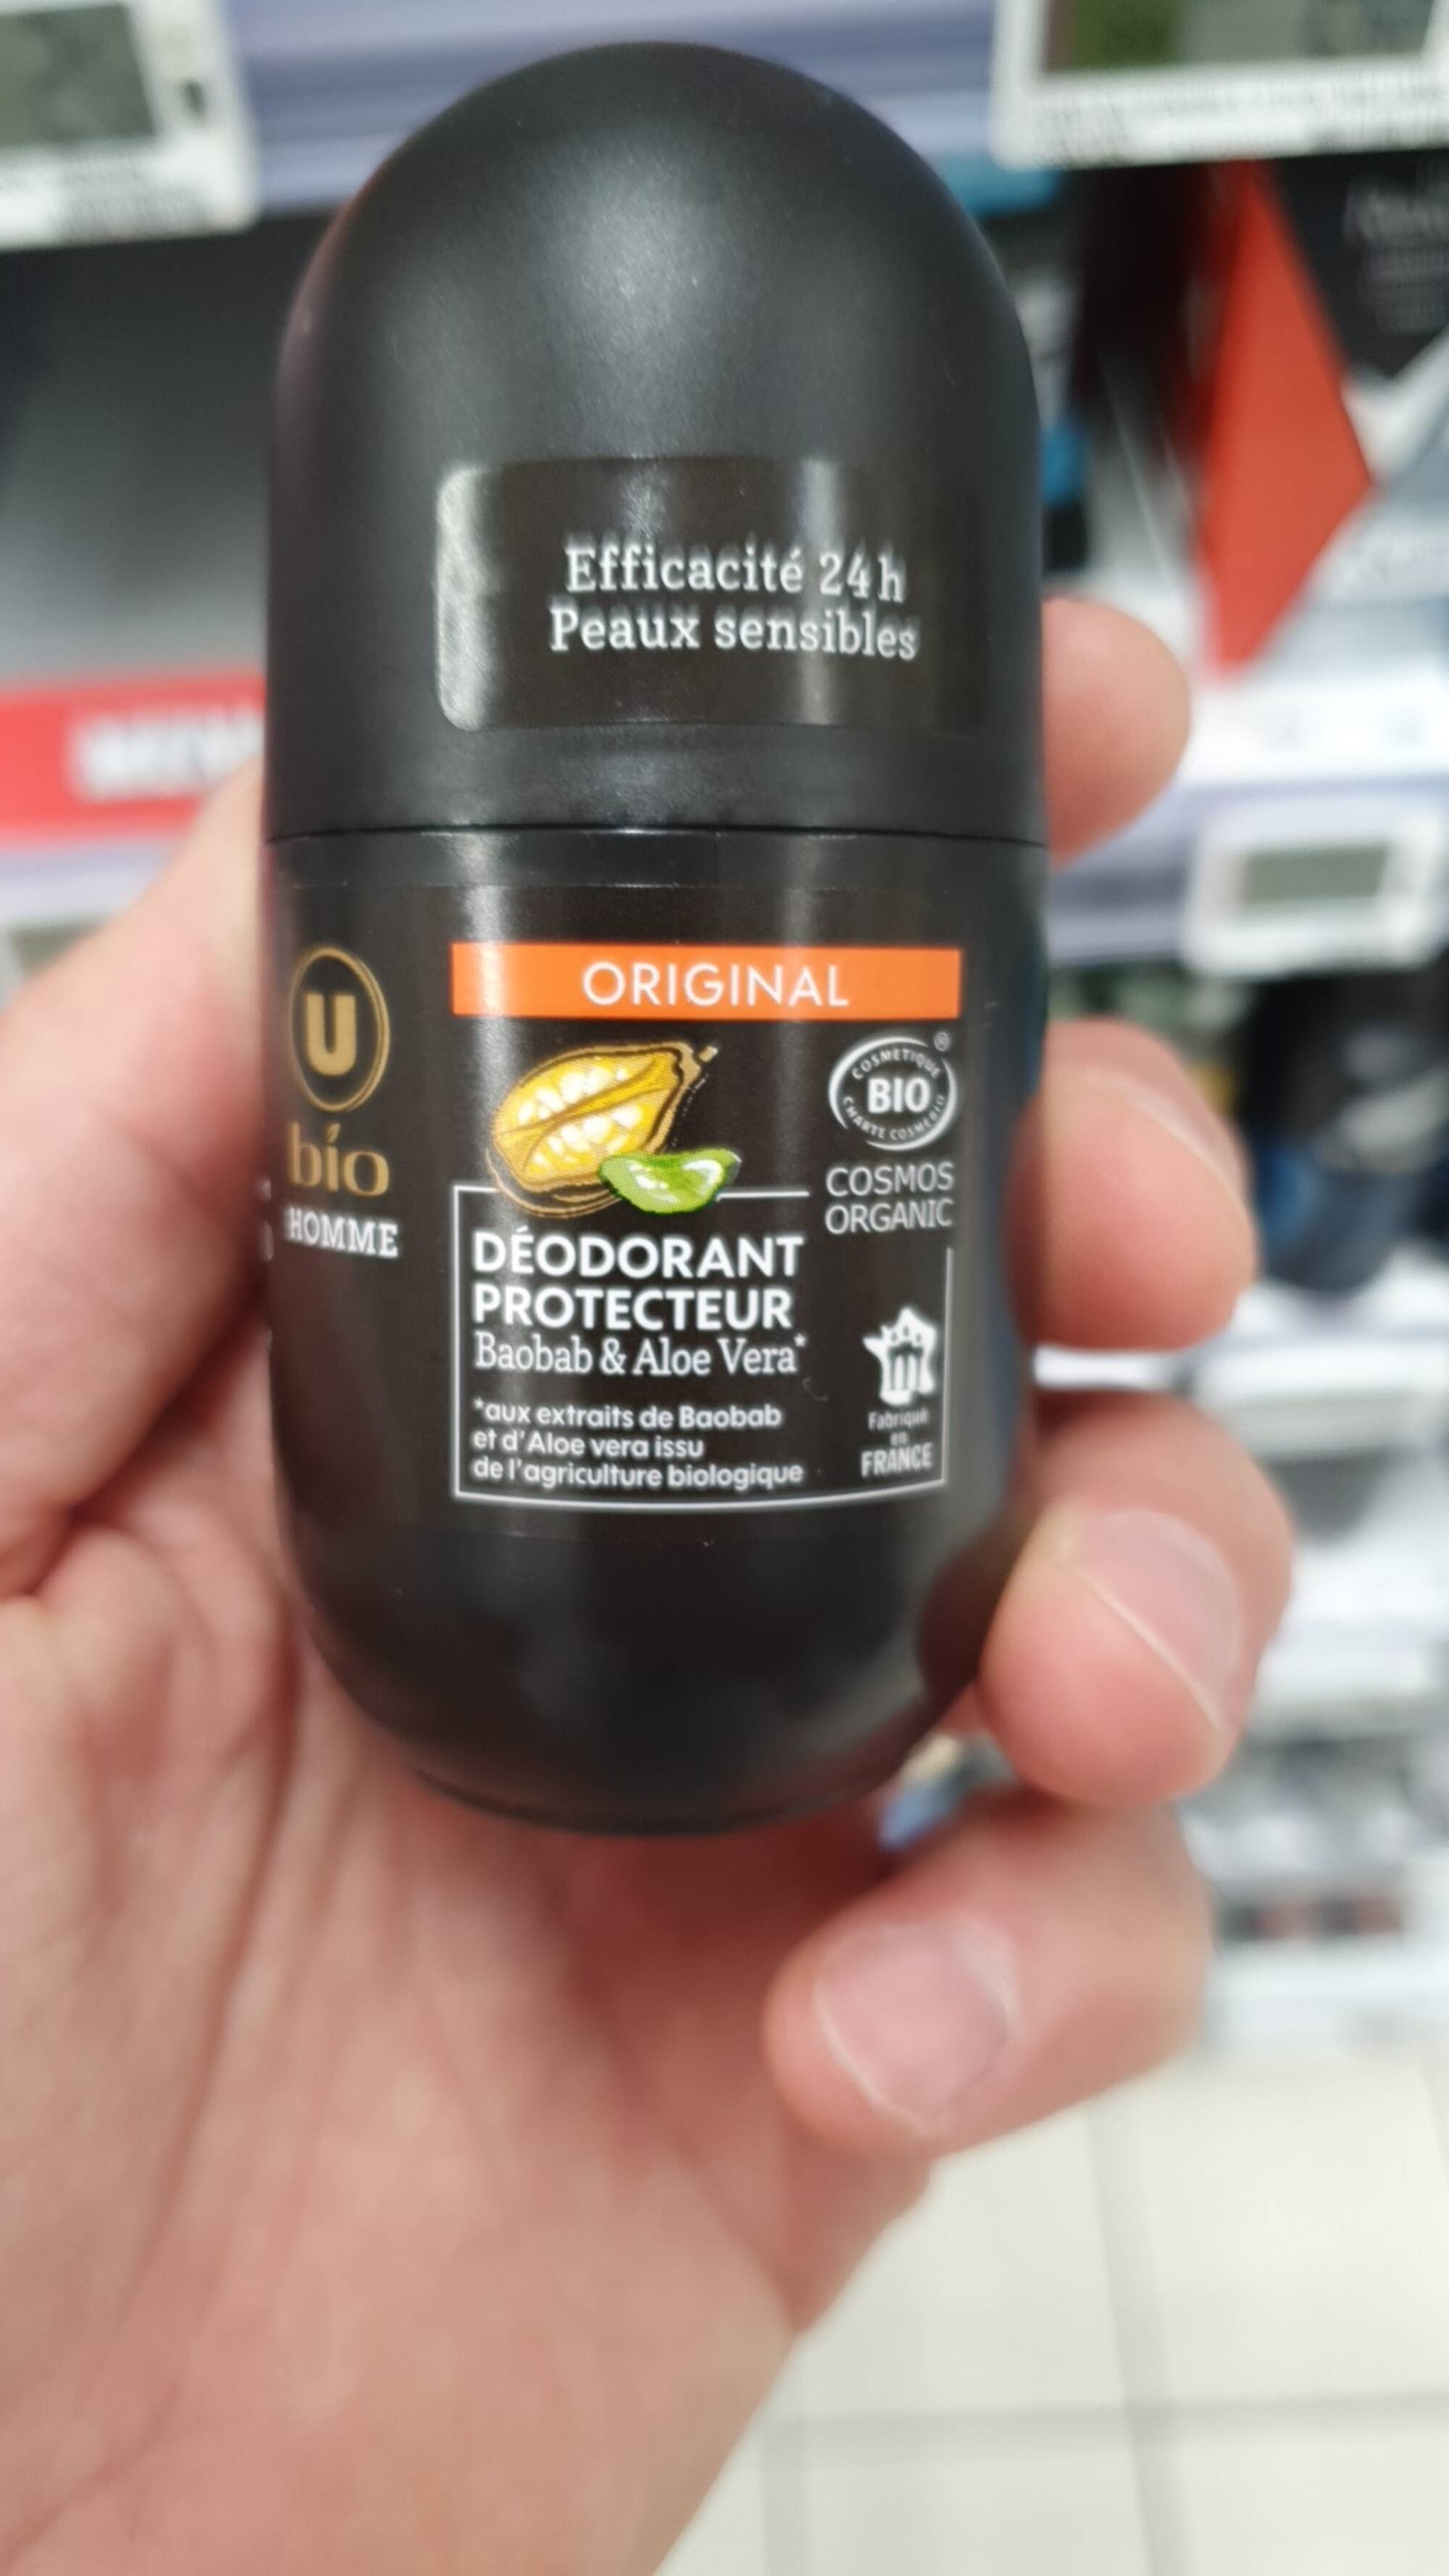 U - Bio Homme - Déodorant protecteur Baobab & Aloe Vera